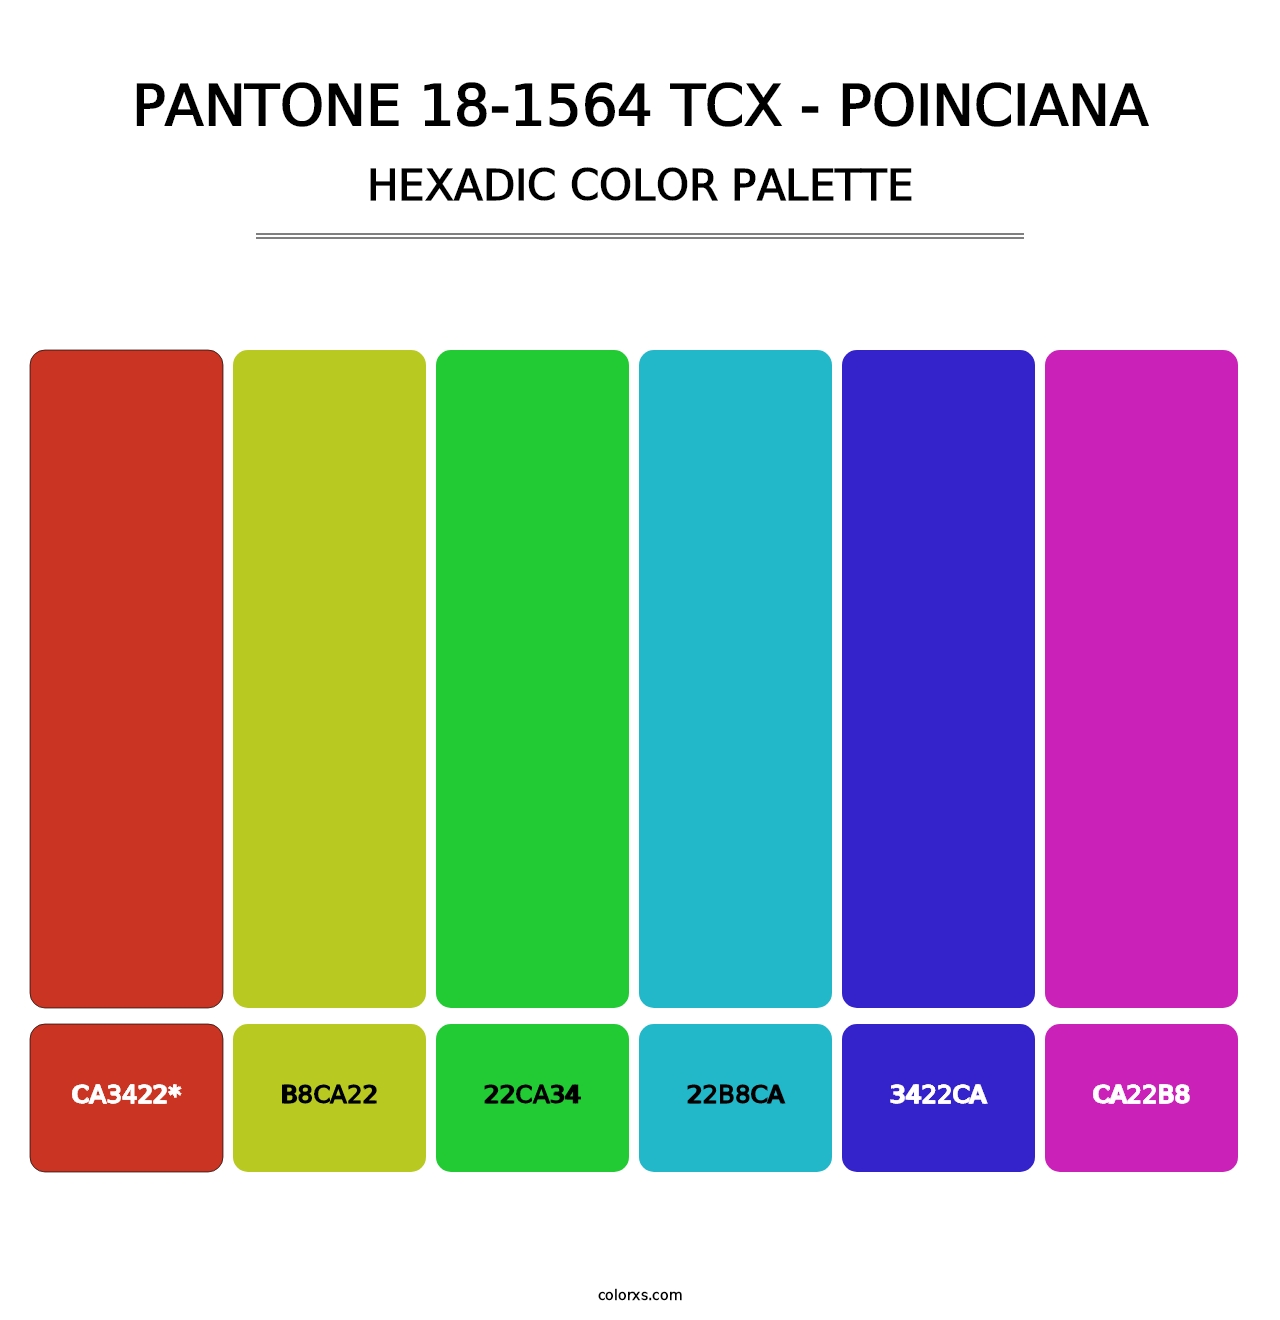 PANTONE 18-1564 TCX - Poinciana - Hexadic Color Palette